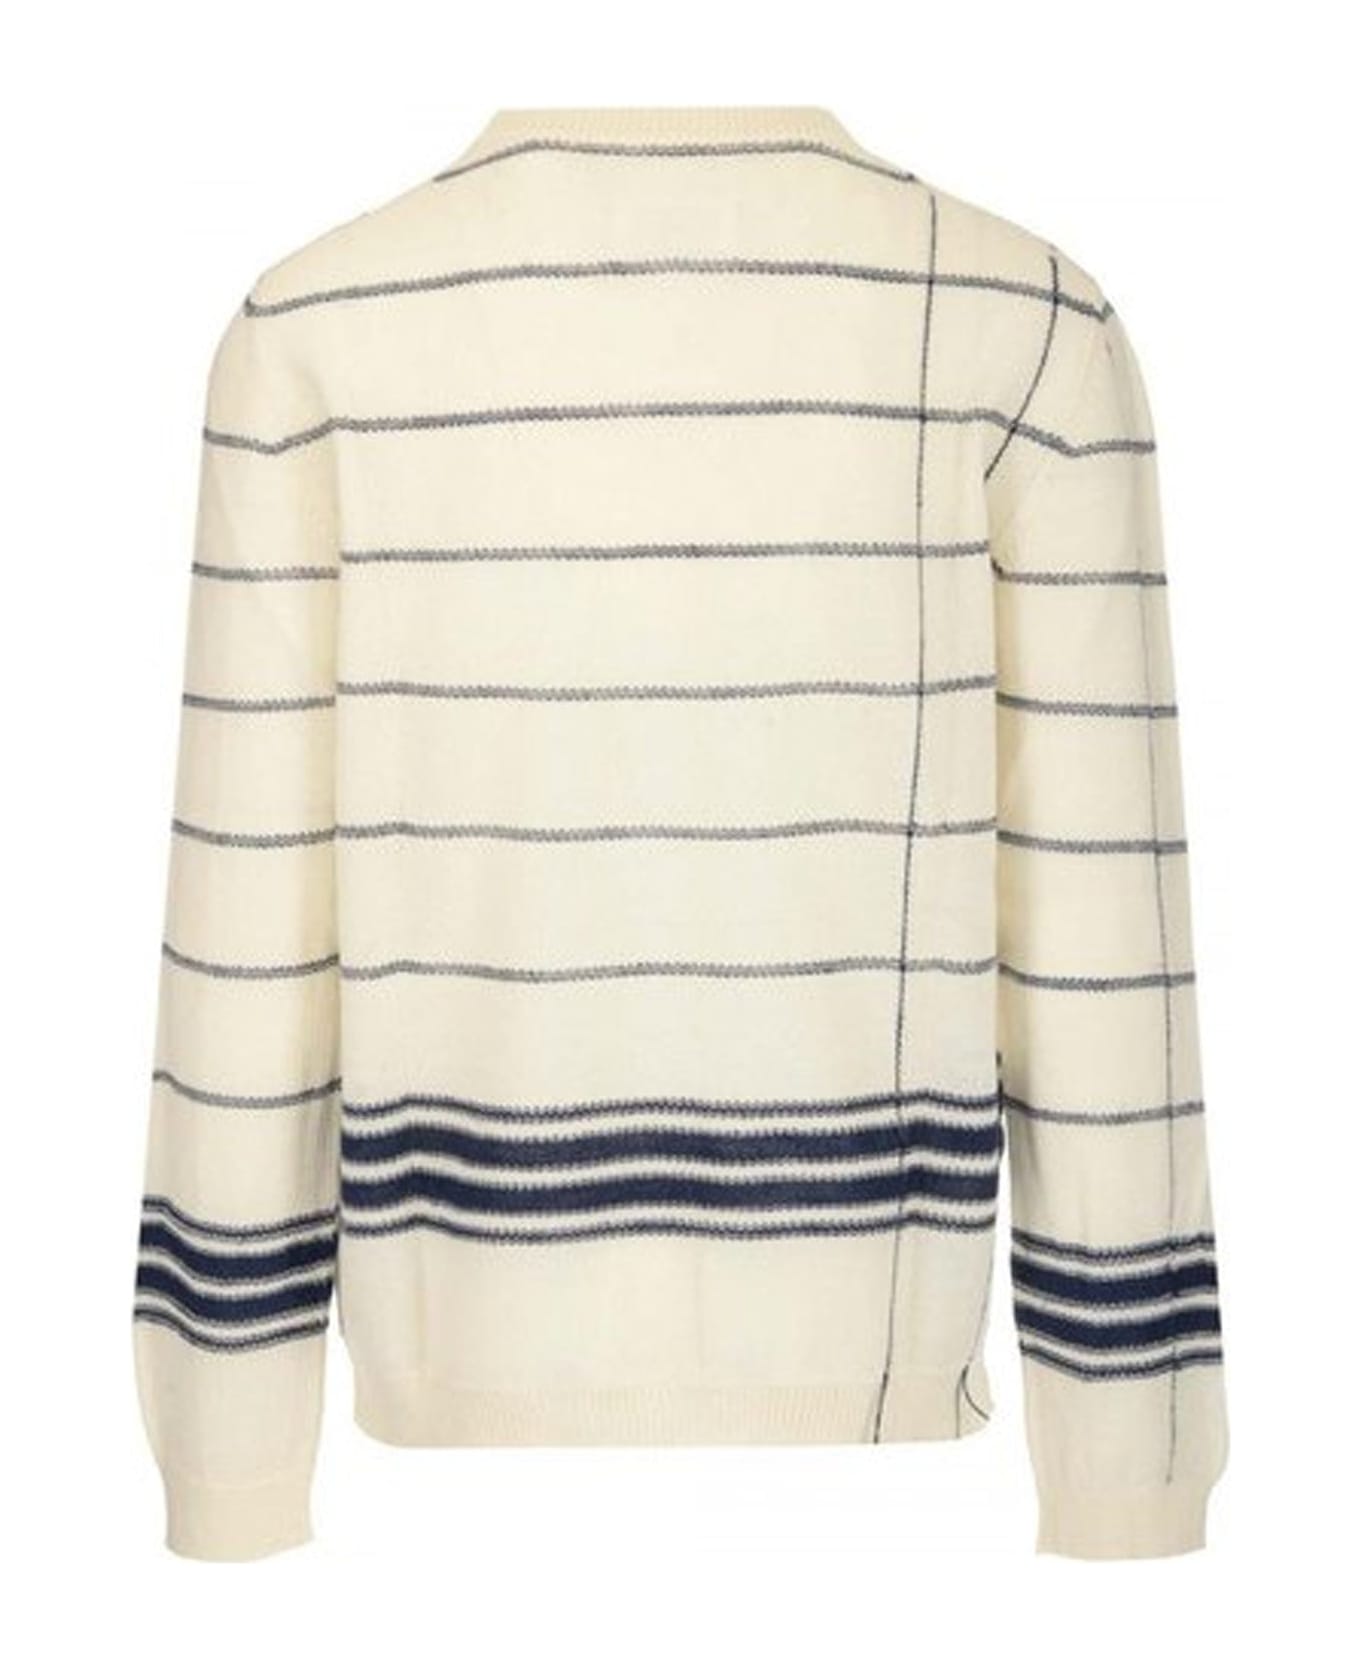 Maison Margiela Striped Sweater - White